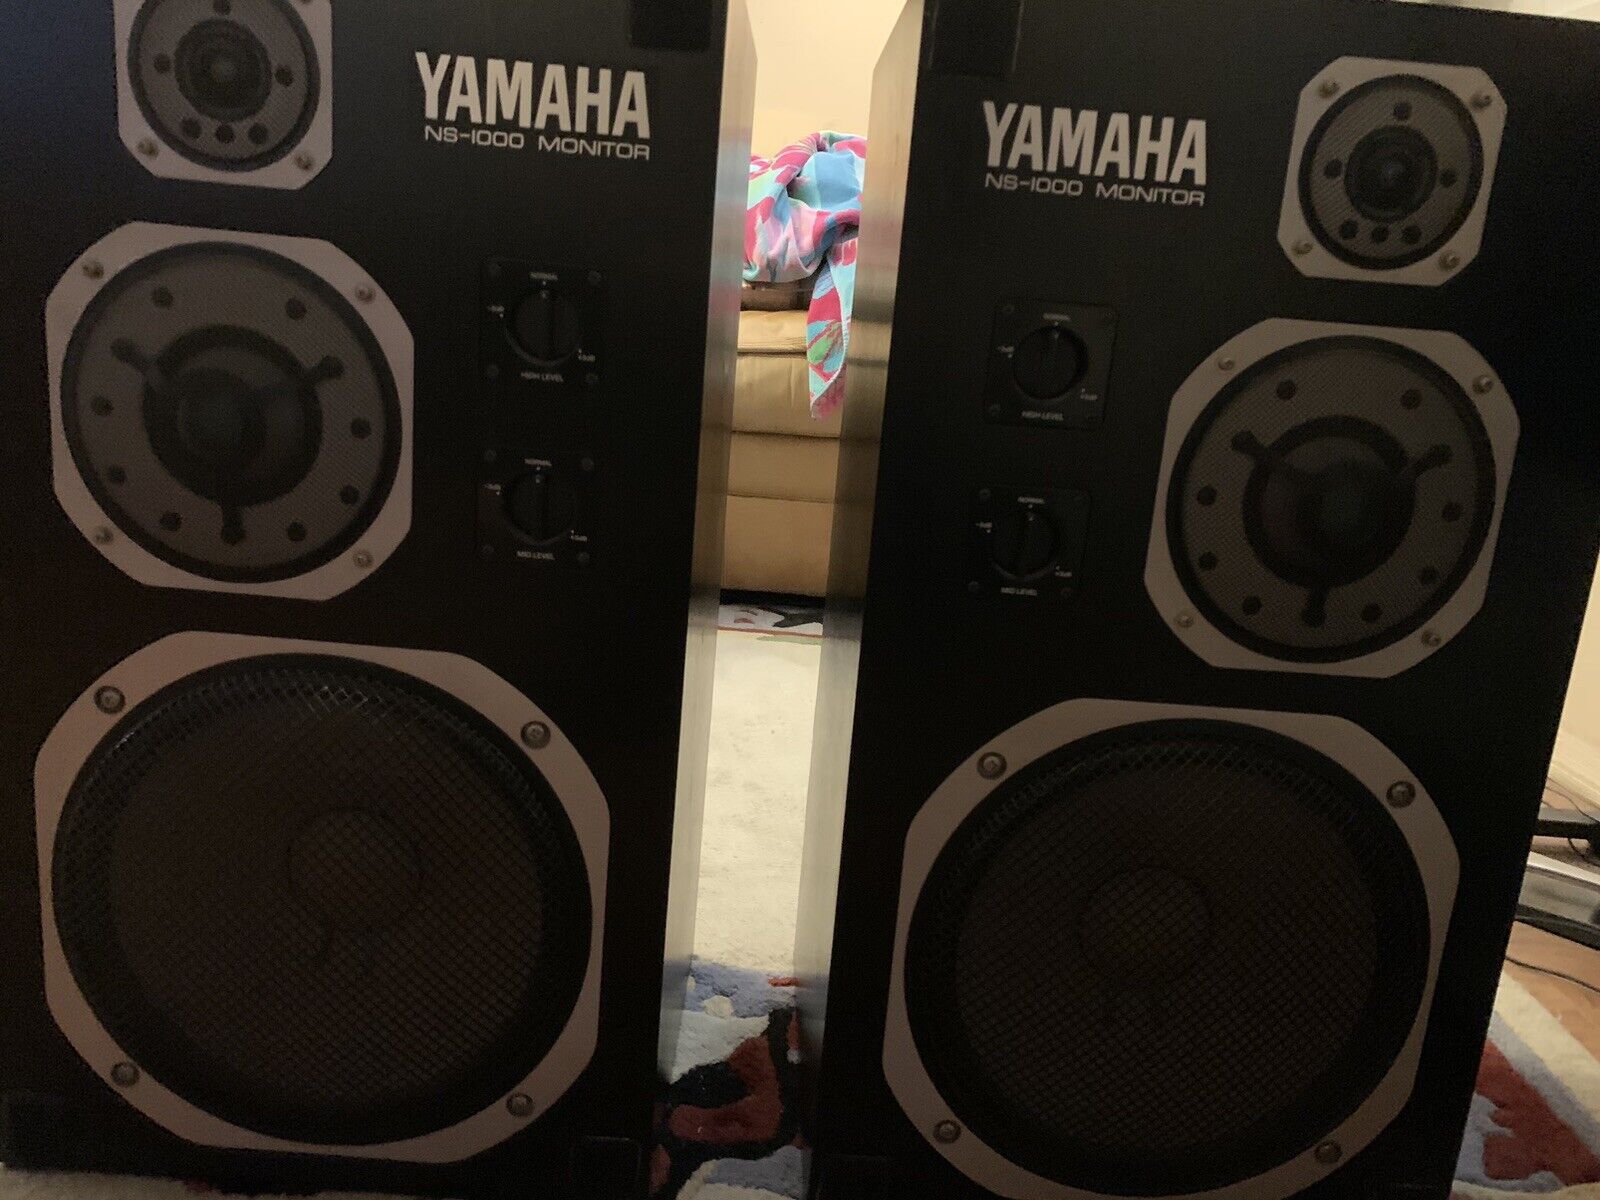 Yamaha+NS1000M+Studio+Monitor+Speaker+System for sale online | eBay